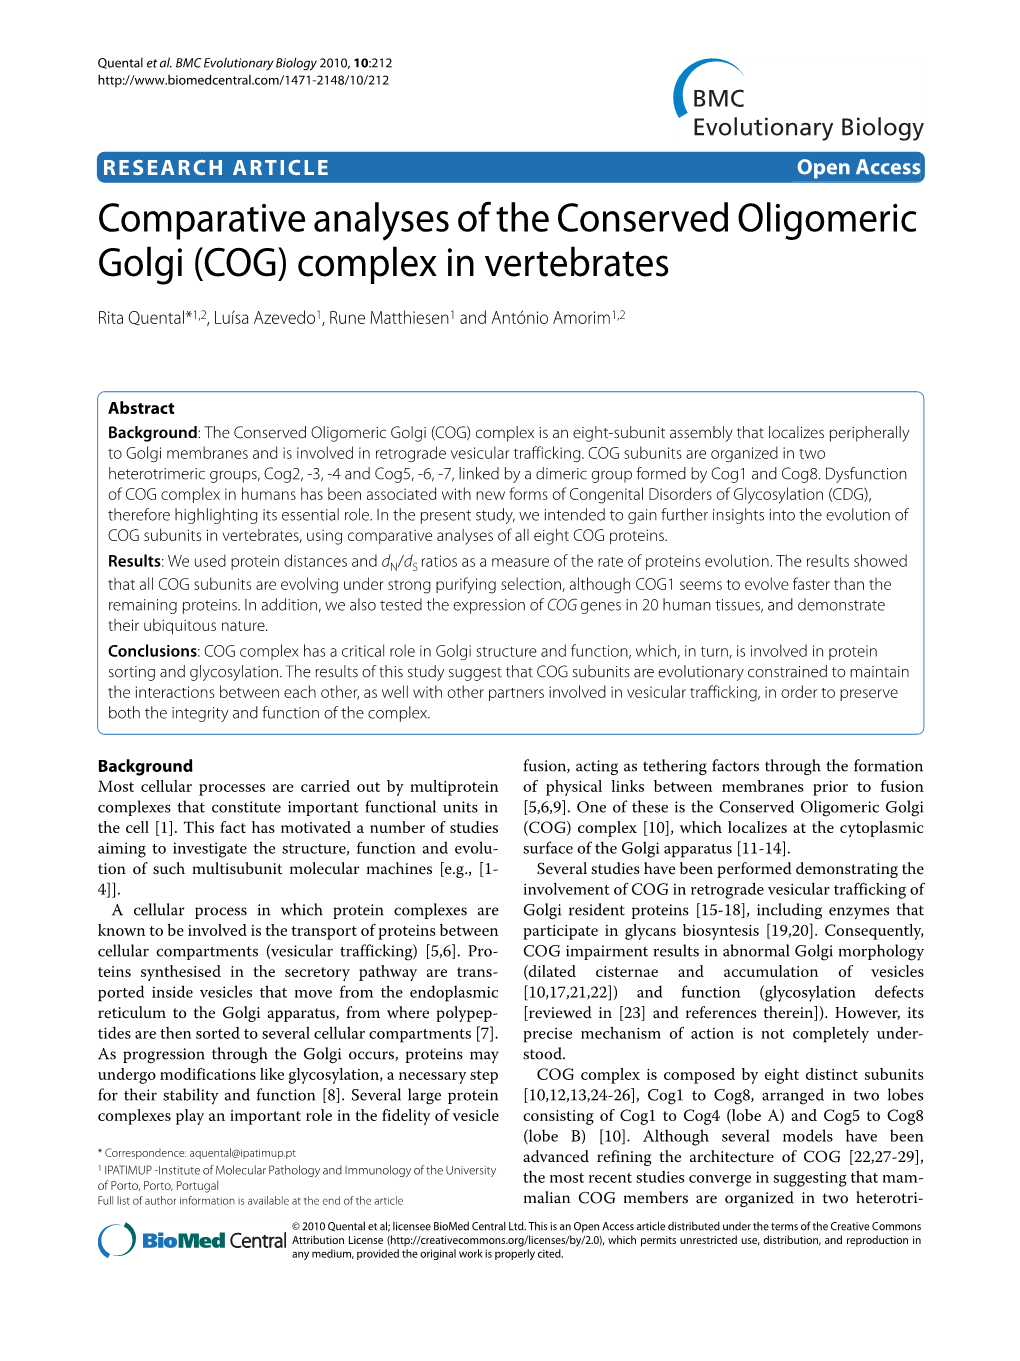 Comparative Analyses of the Conserved Oligomeric Golgi (COG) Complex in Vertebrates BMC Evolutionary Biology 2010, 10:212